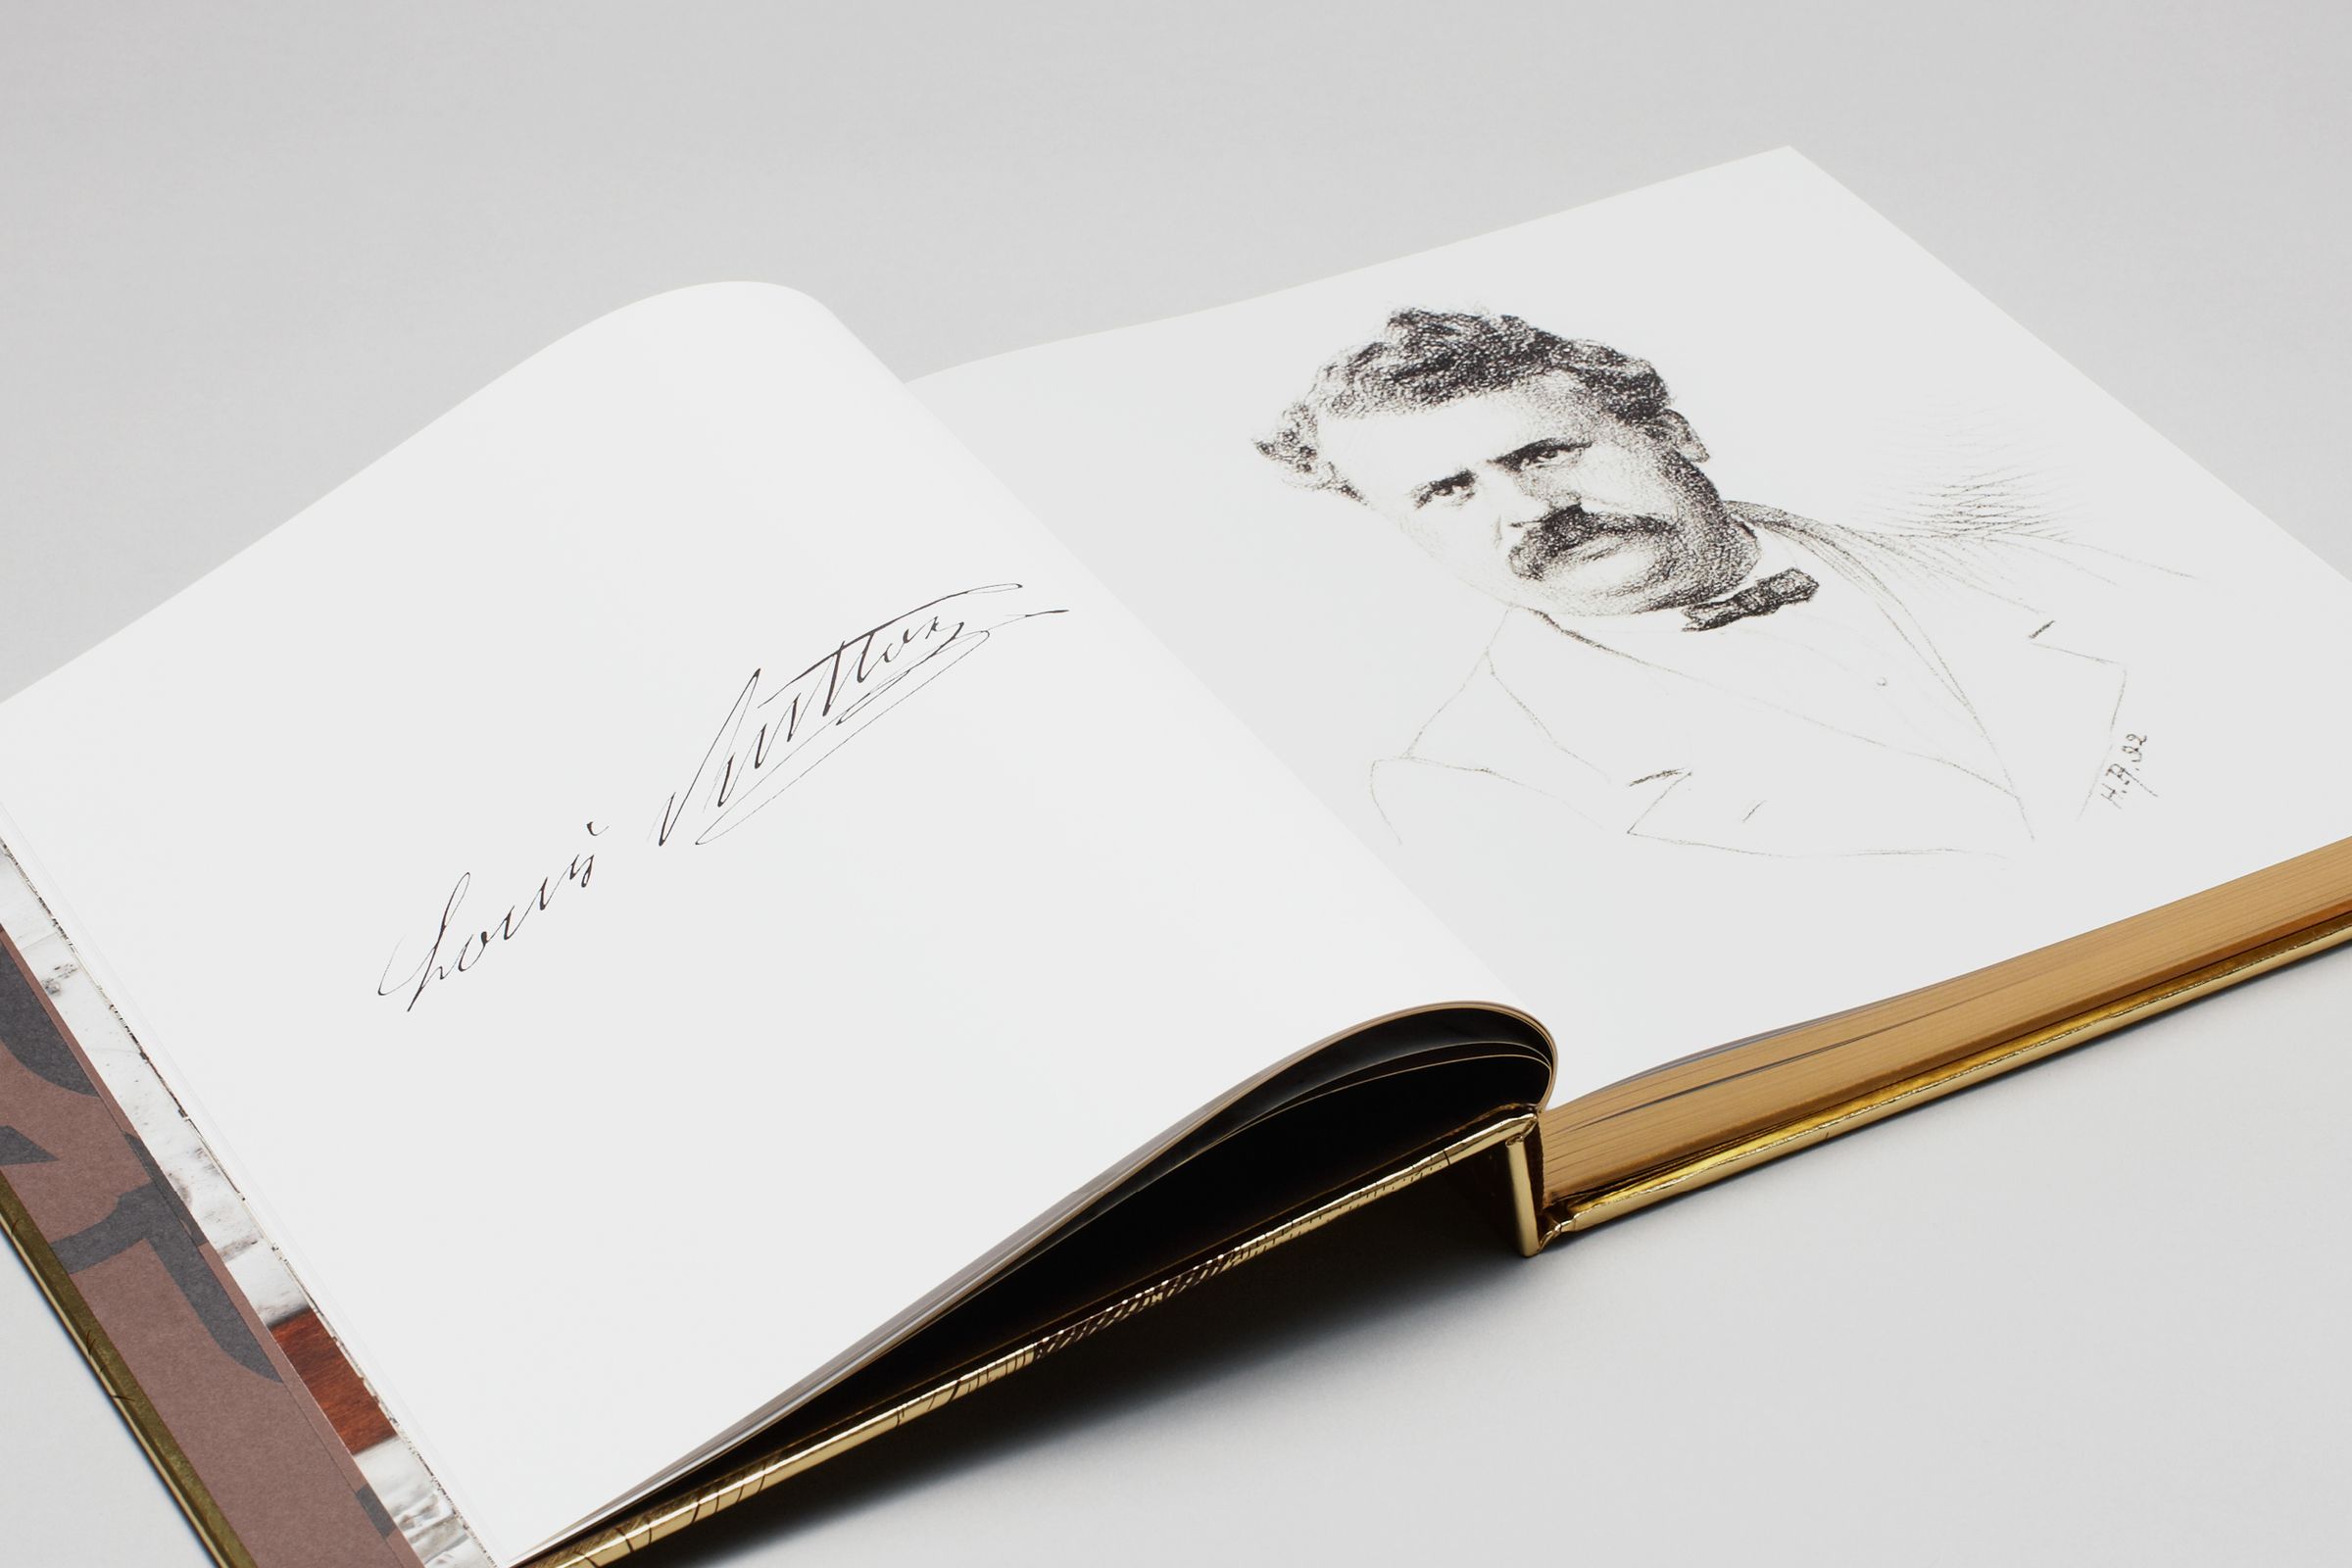 AROWONEN - Book - Louis Vuitton - Marc Jacobs